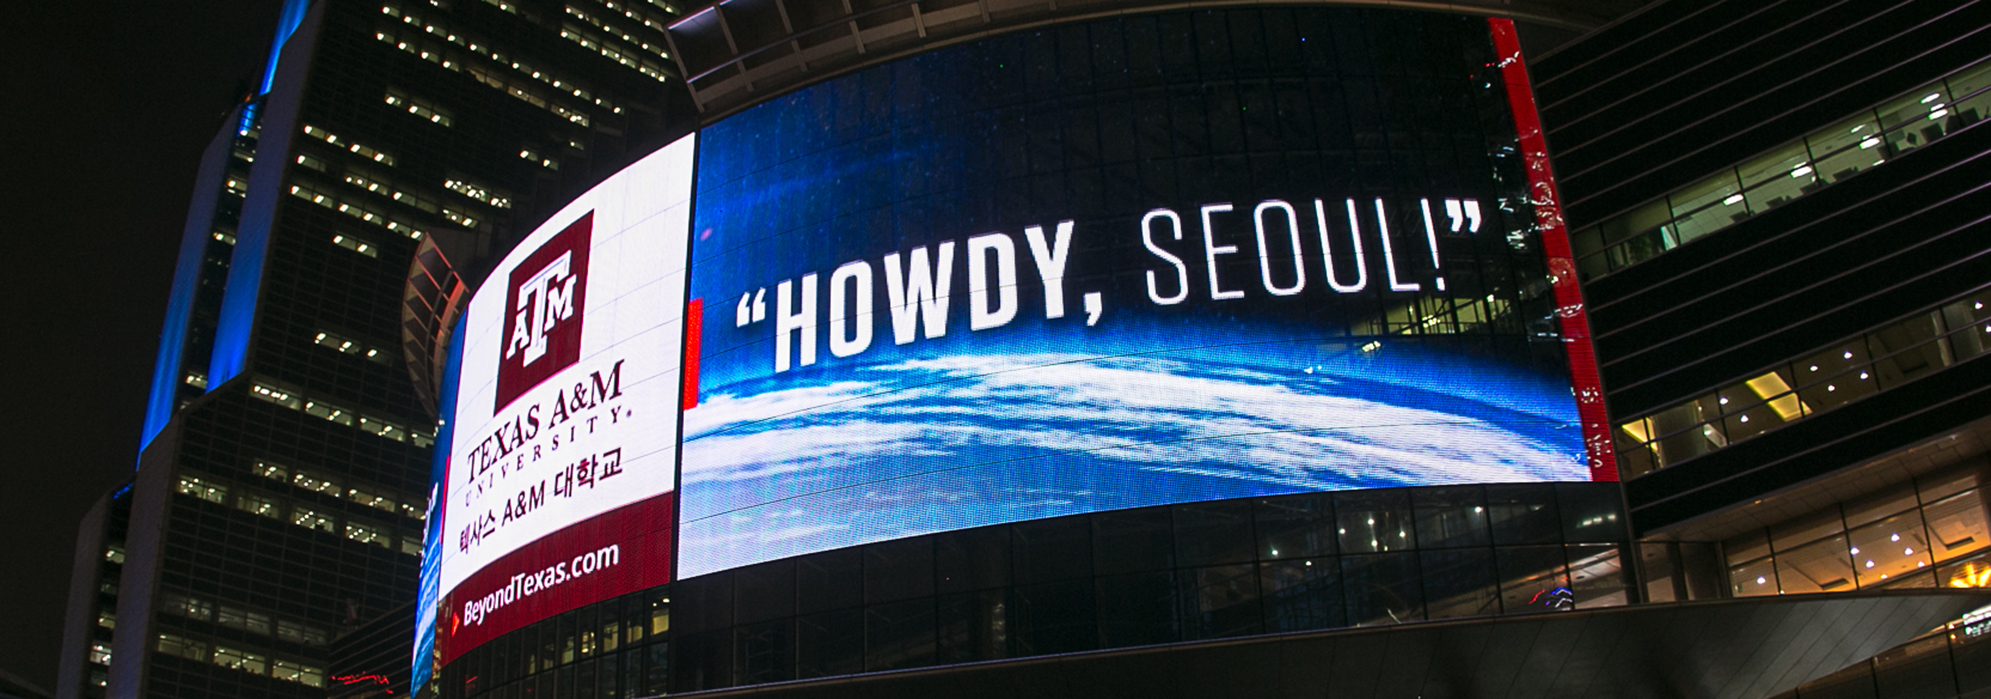 International Ad in Seoul